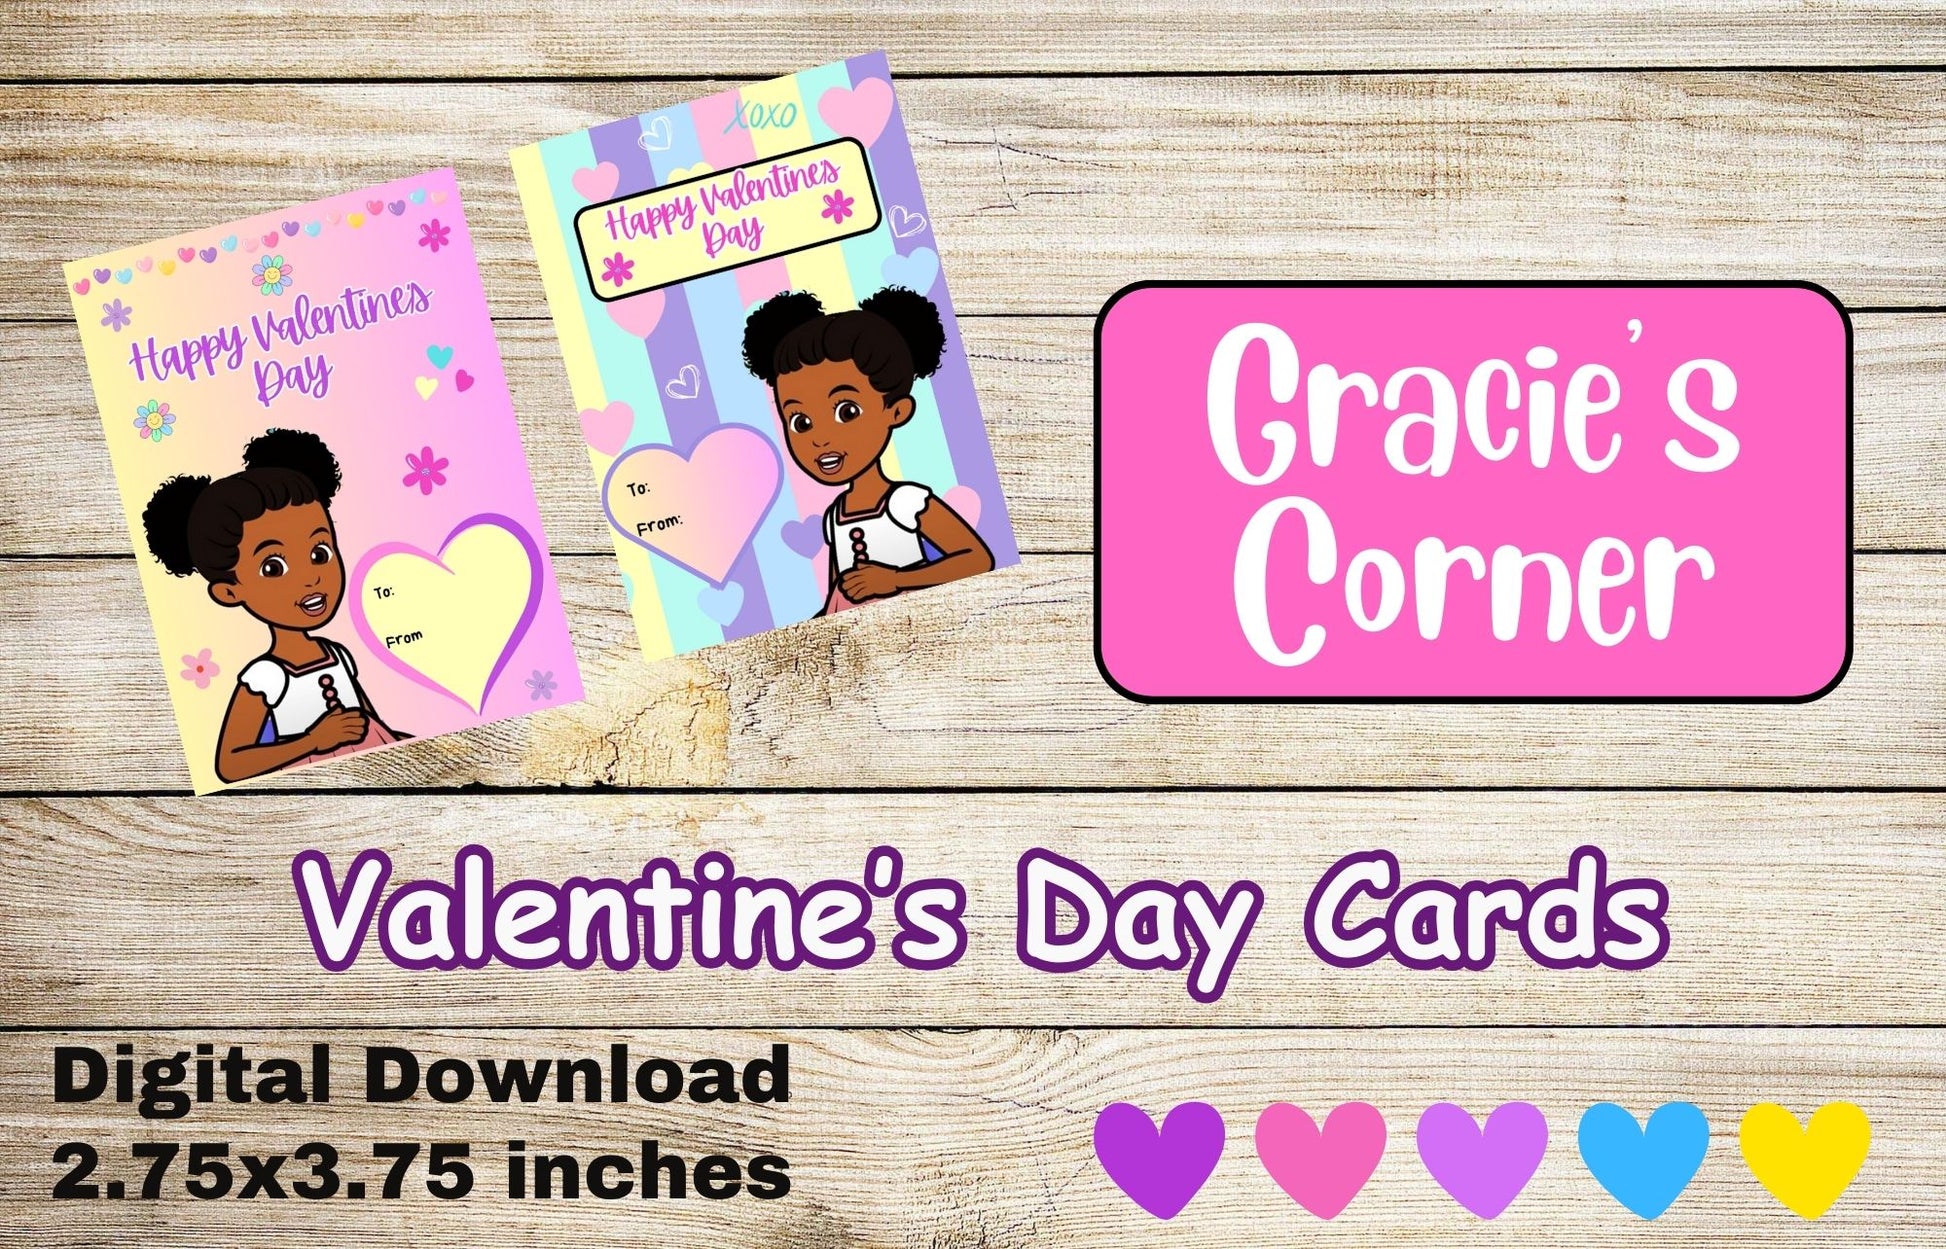 Gracie's Corner Valentine's Day Cards